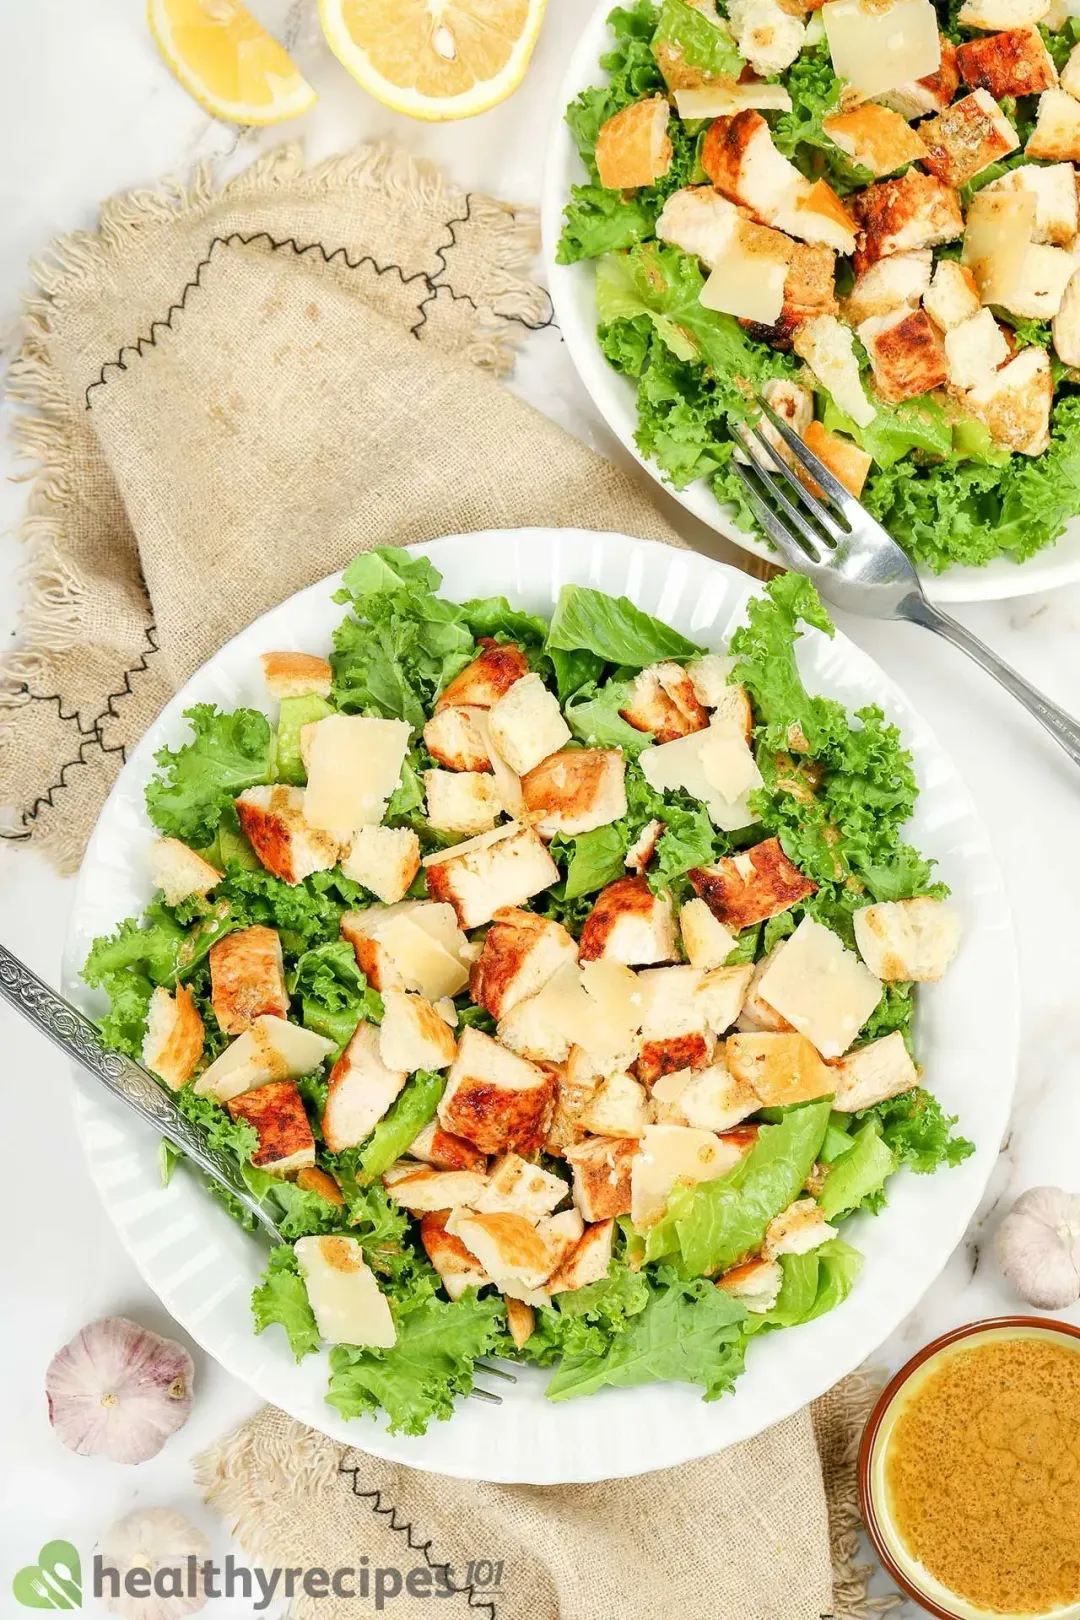 What to Eat With Lemon Kale Caesar Salad